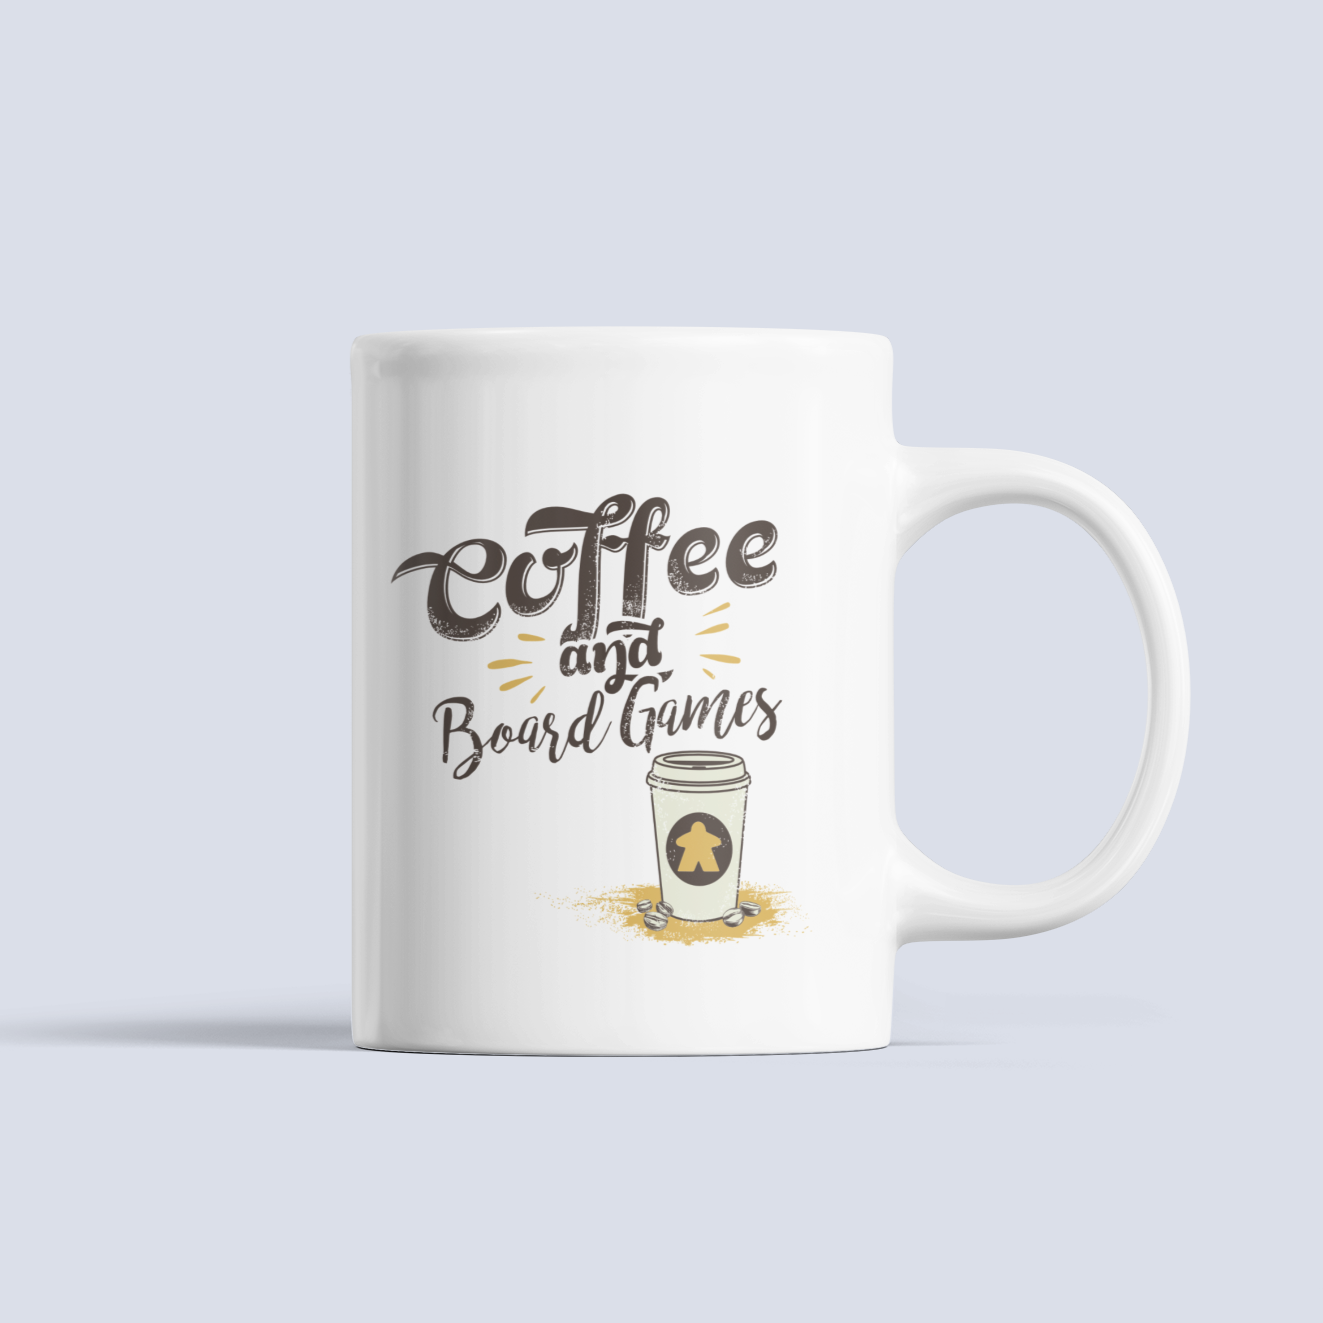 coffee to go and board games ceramic mug